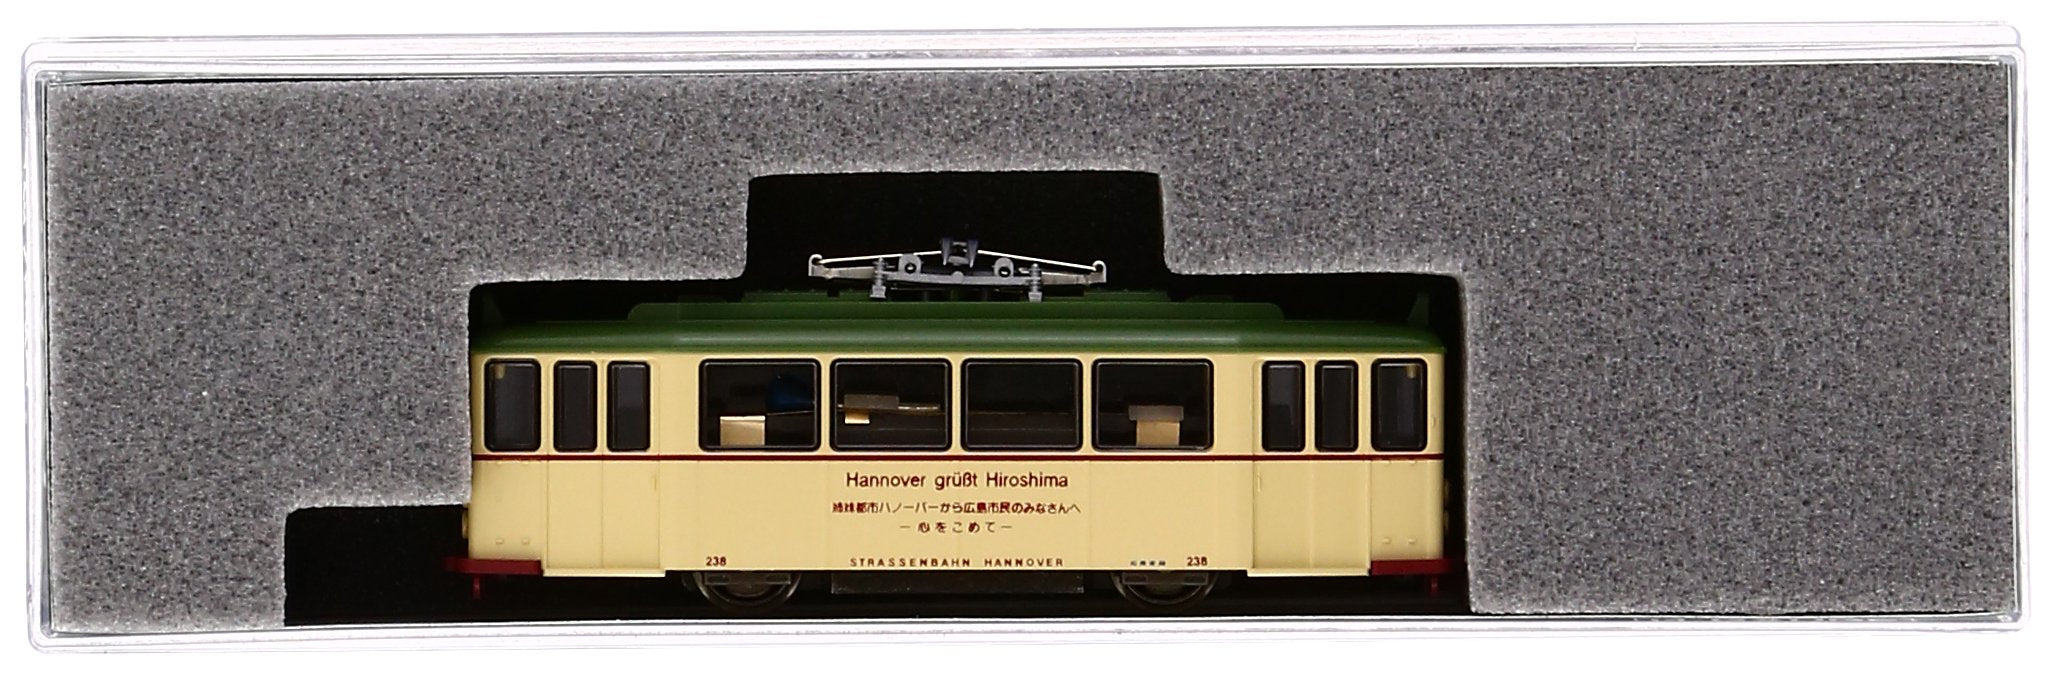 Kato N Gauge Hiroshima 14-070 Railway Model Train Hannover Type 200